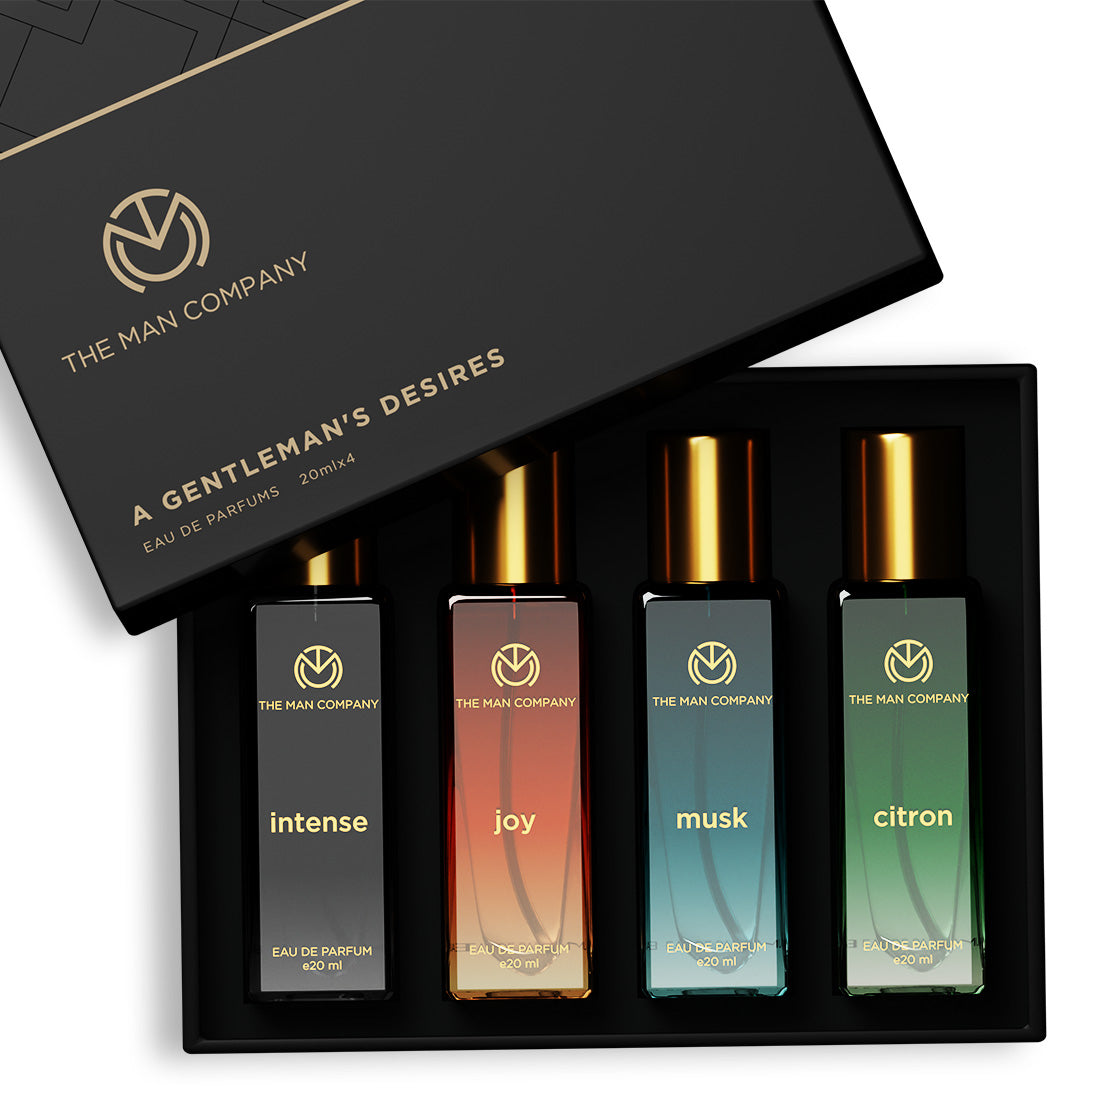 Send Exclusive Skinn Celeste Coffret Set of Perfume N Deo for Men N Women |  Free Delivery | PrettyPetals